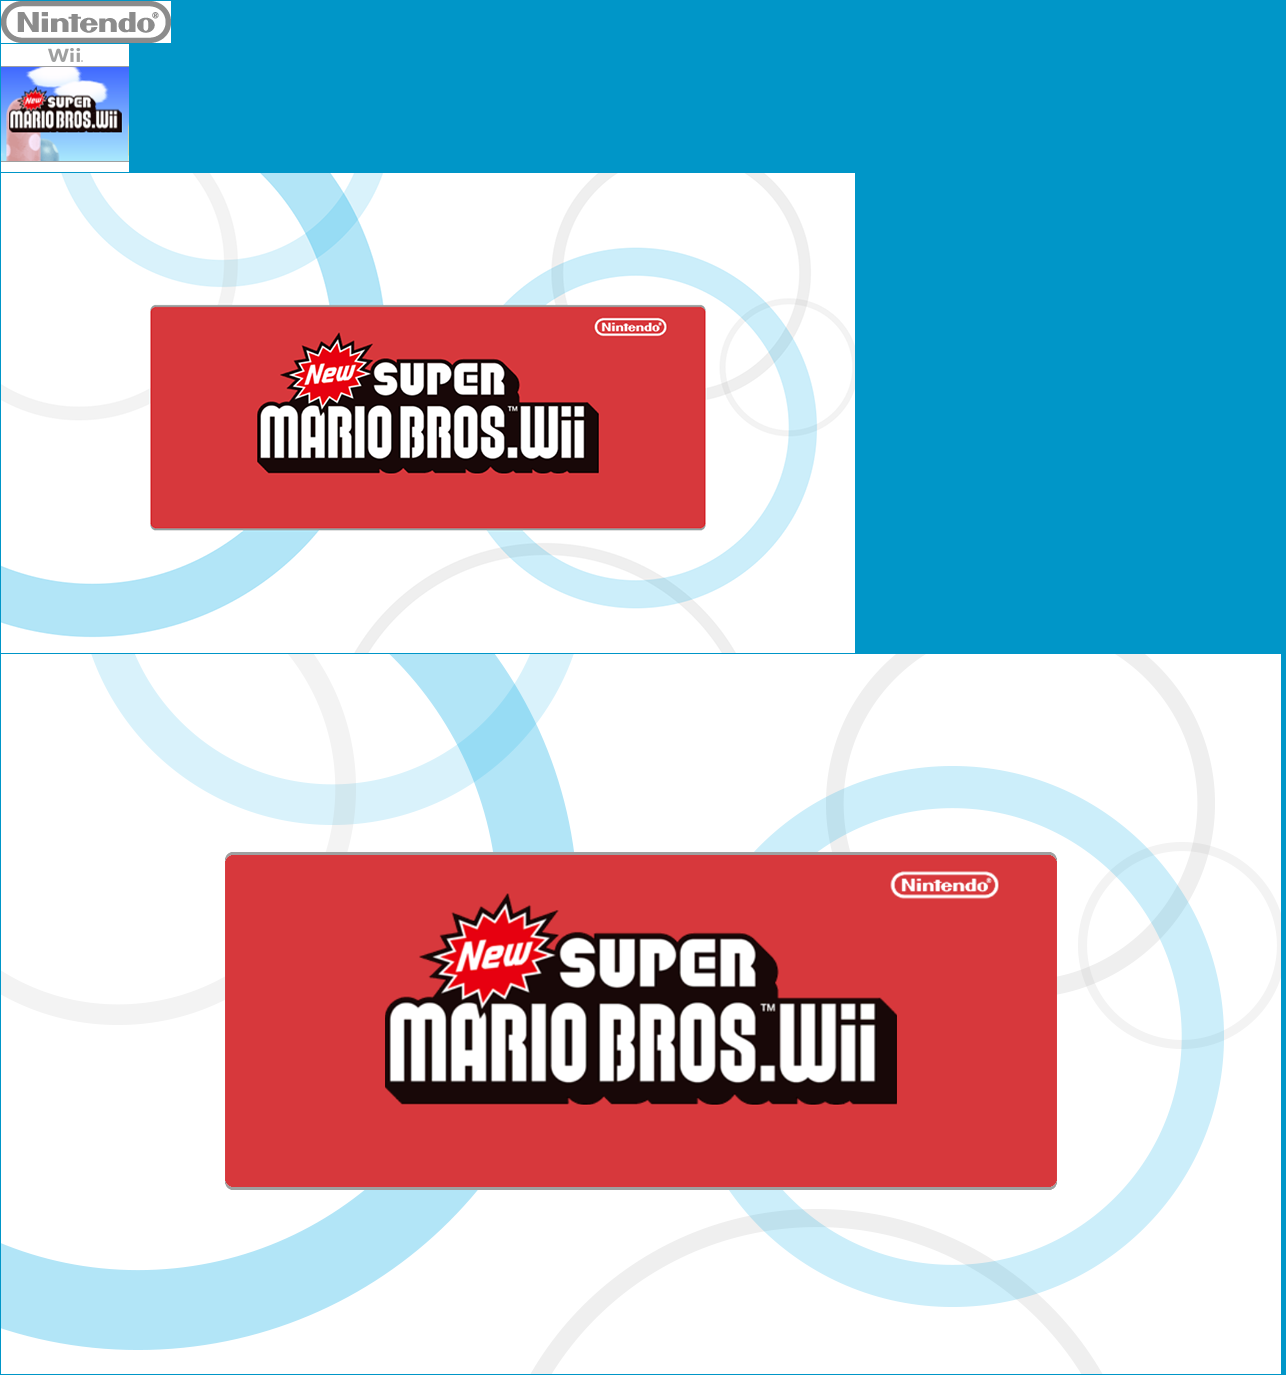 Virtual Console - New SUPER MARIO BROS. Wii